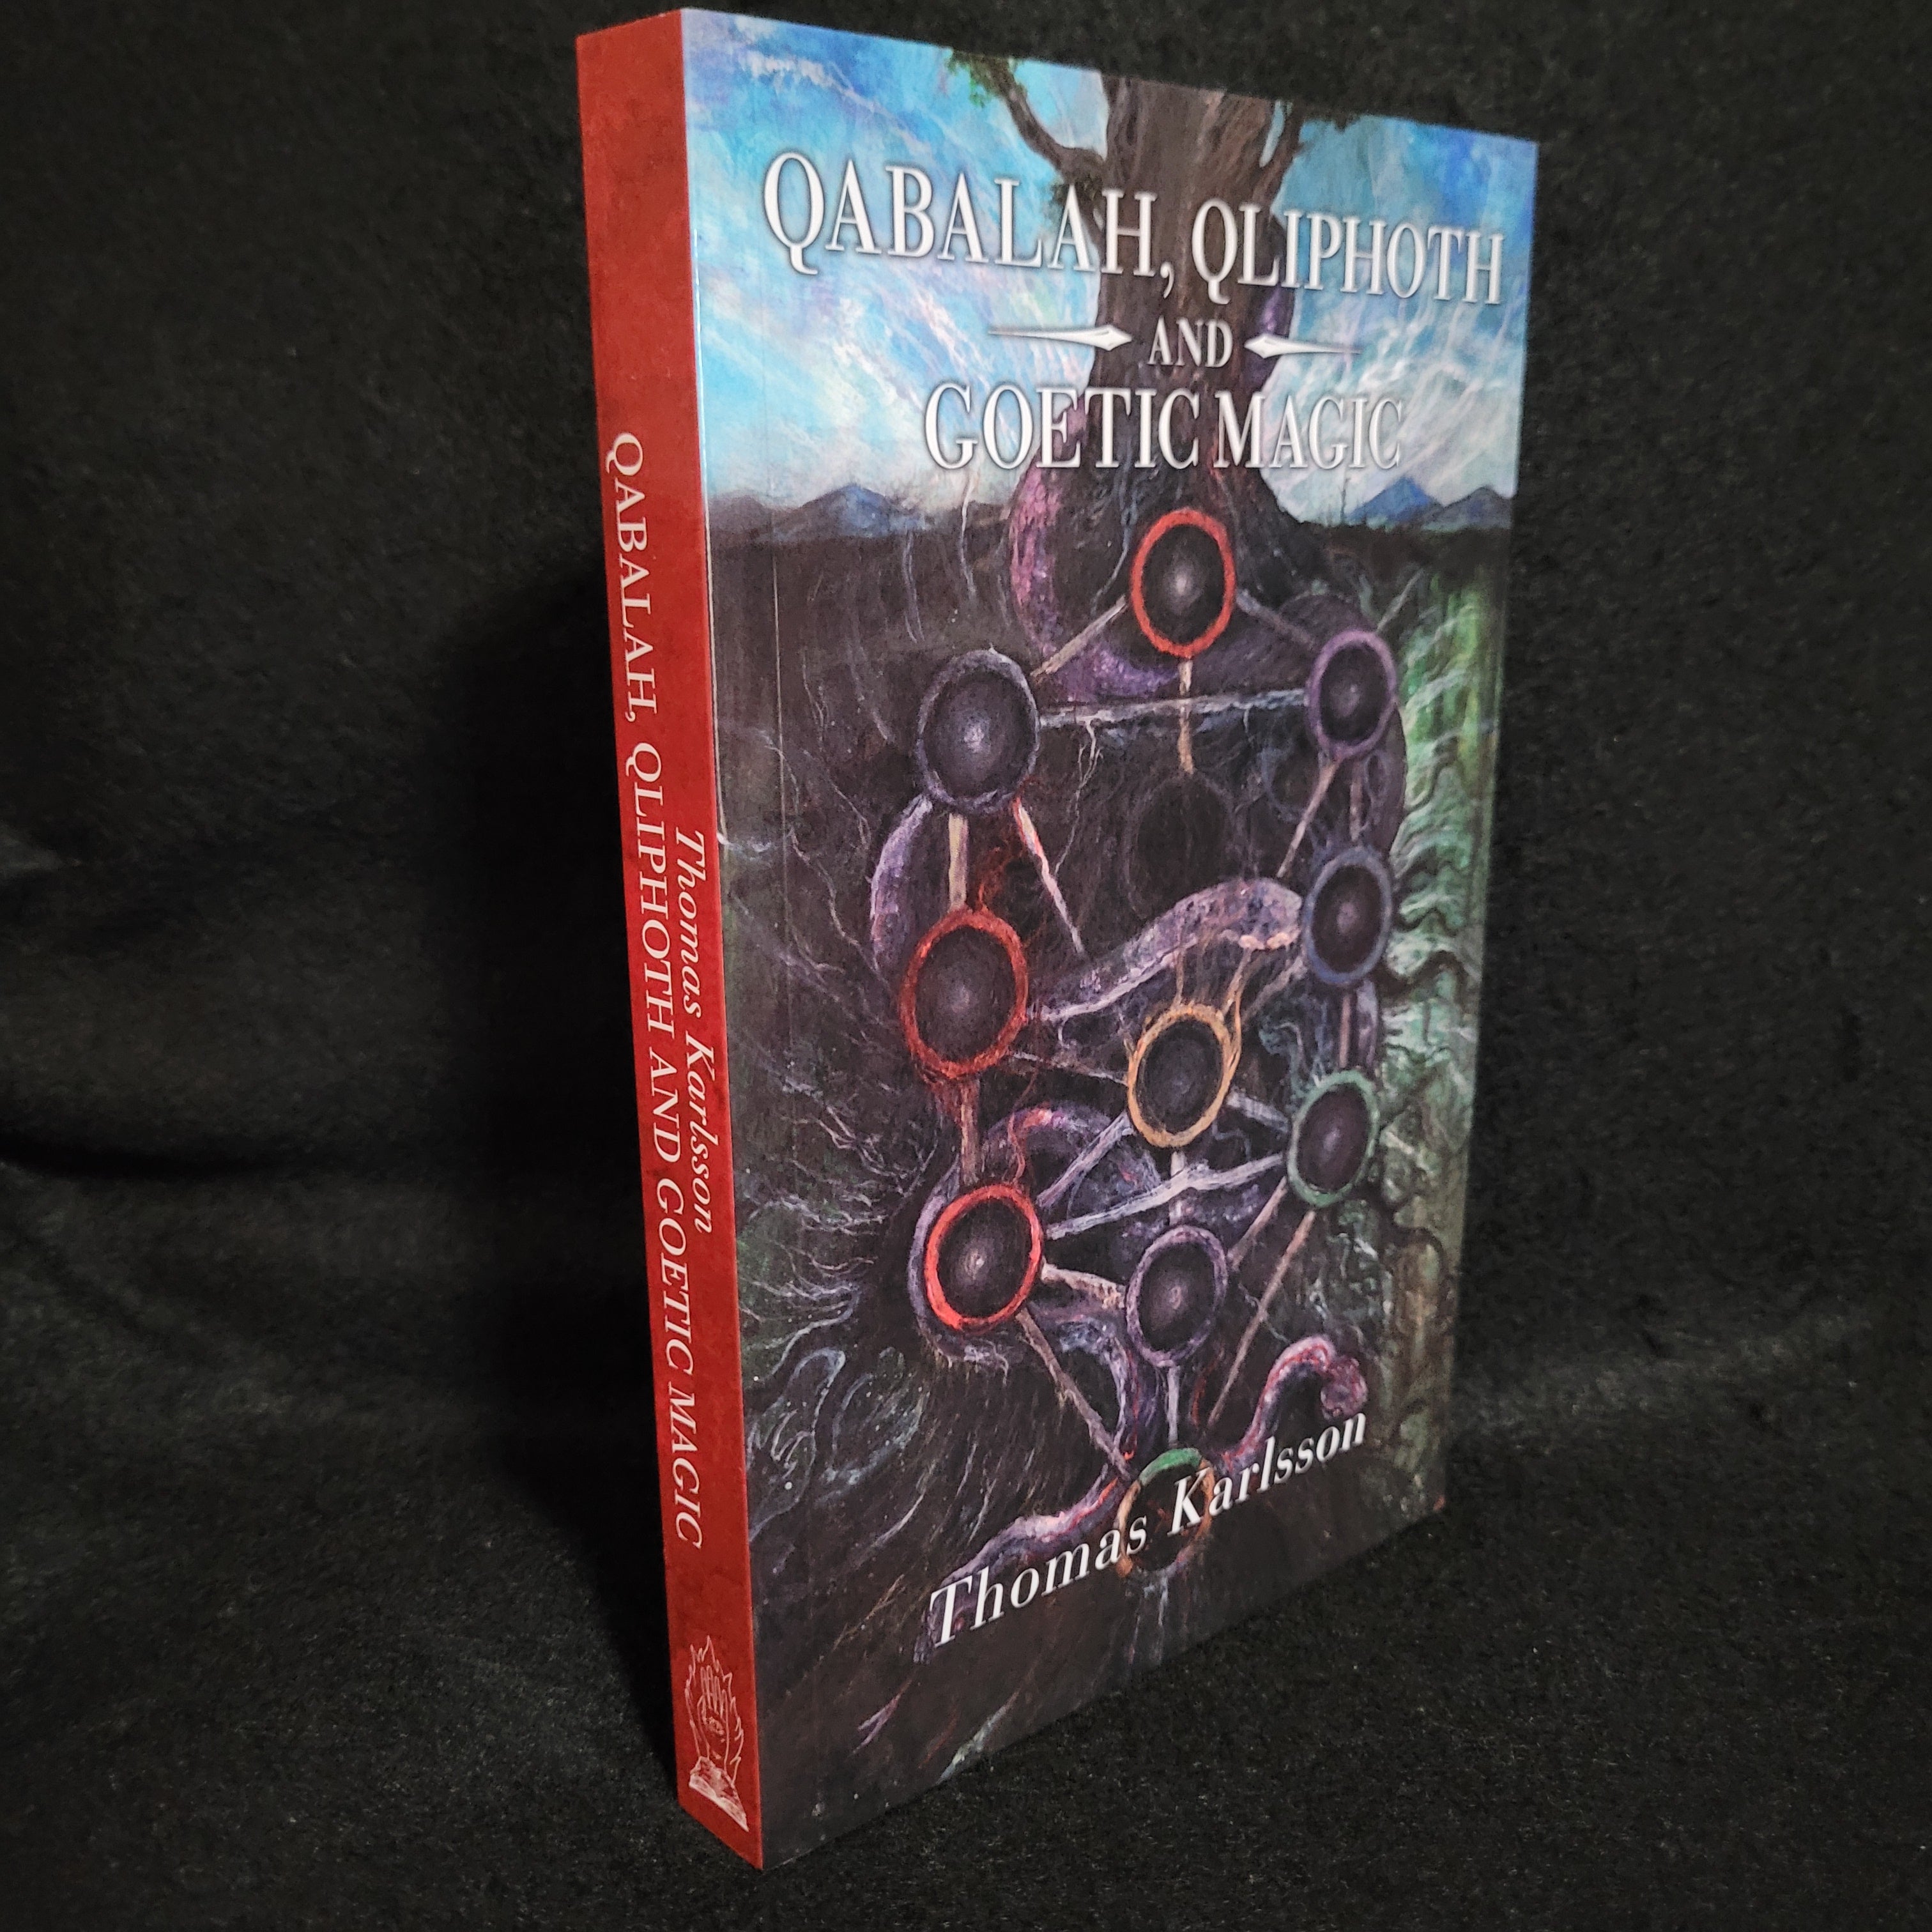 Qabalah, Qliphoth and Goetic Magic by Thomas Karlsson (Manus Sinistra  Publishing, 2022) Softcover Edition